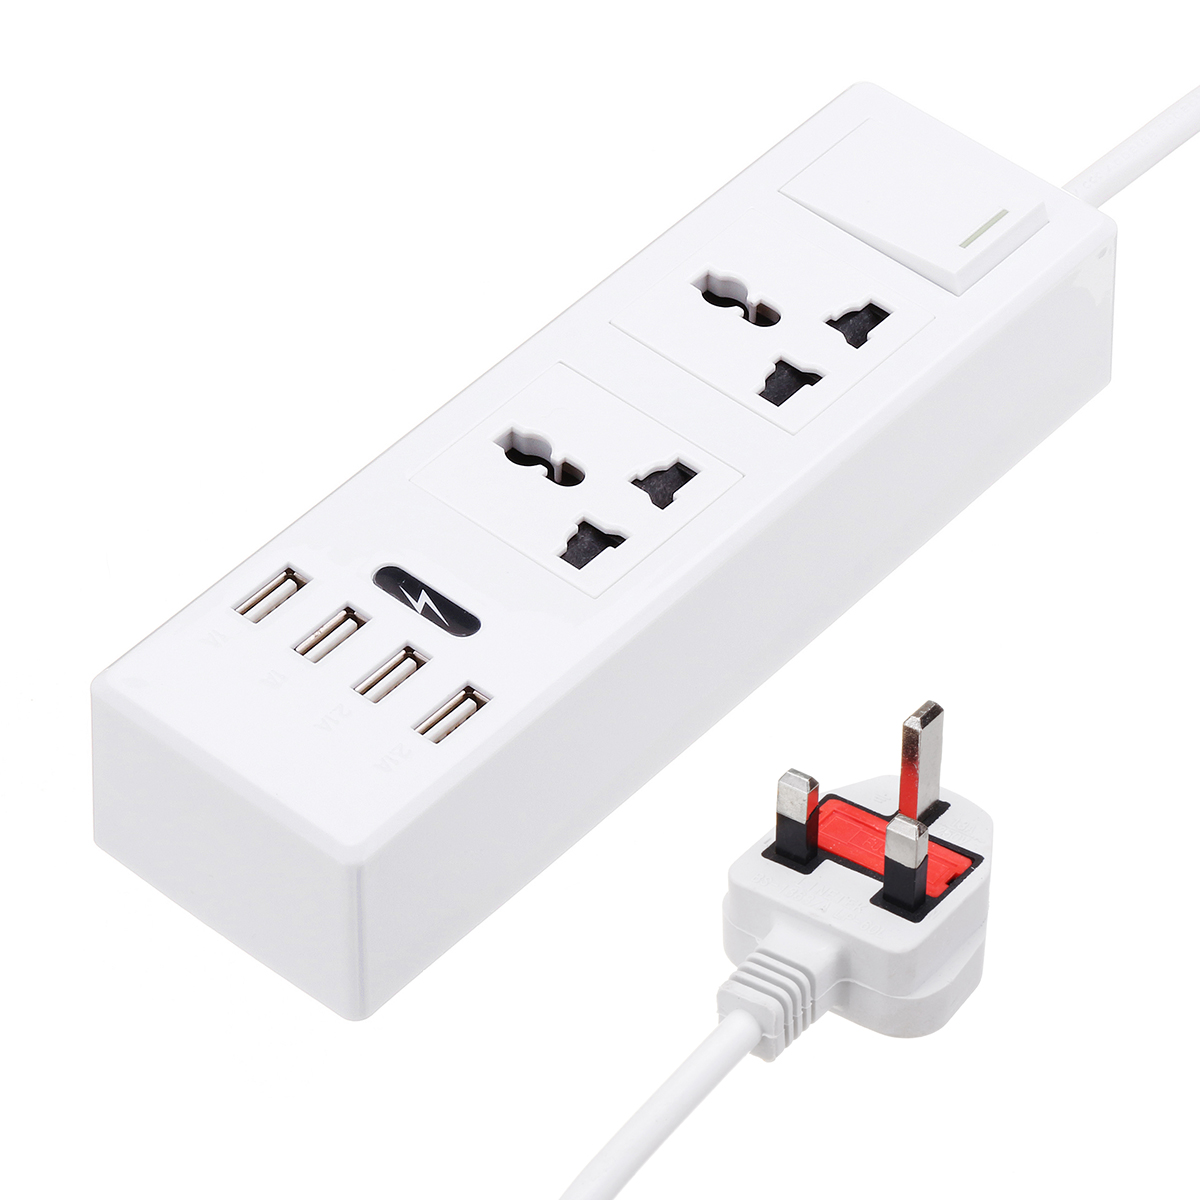 

Multifunctional Power Strip Socket Plug Adapter with 4 USB Ports Smart Home US/EU/UK Plug